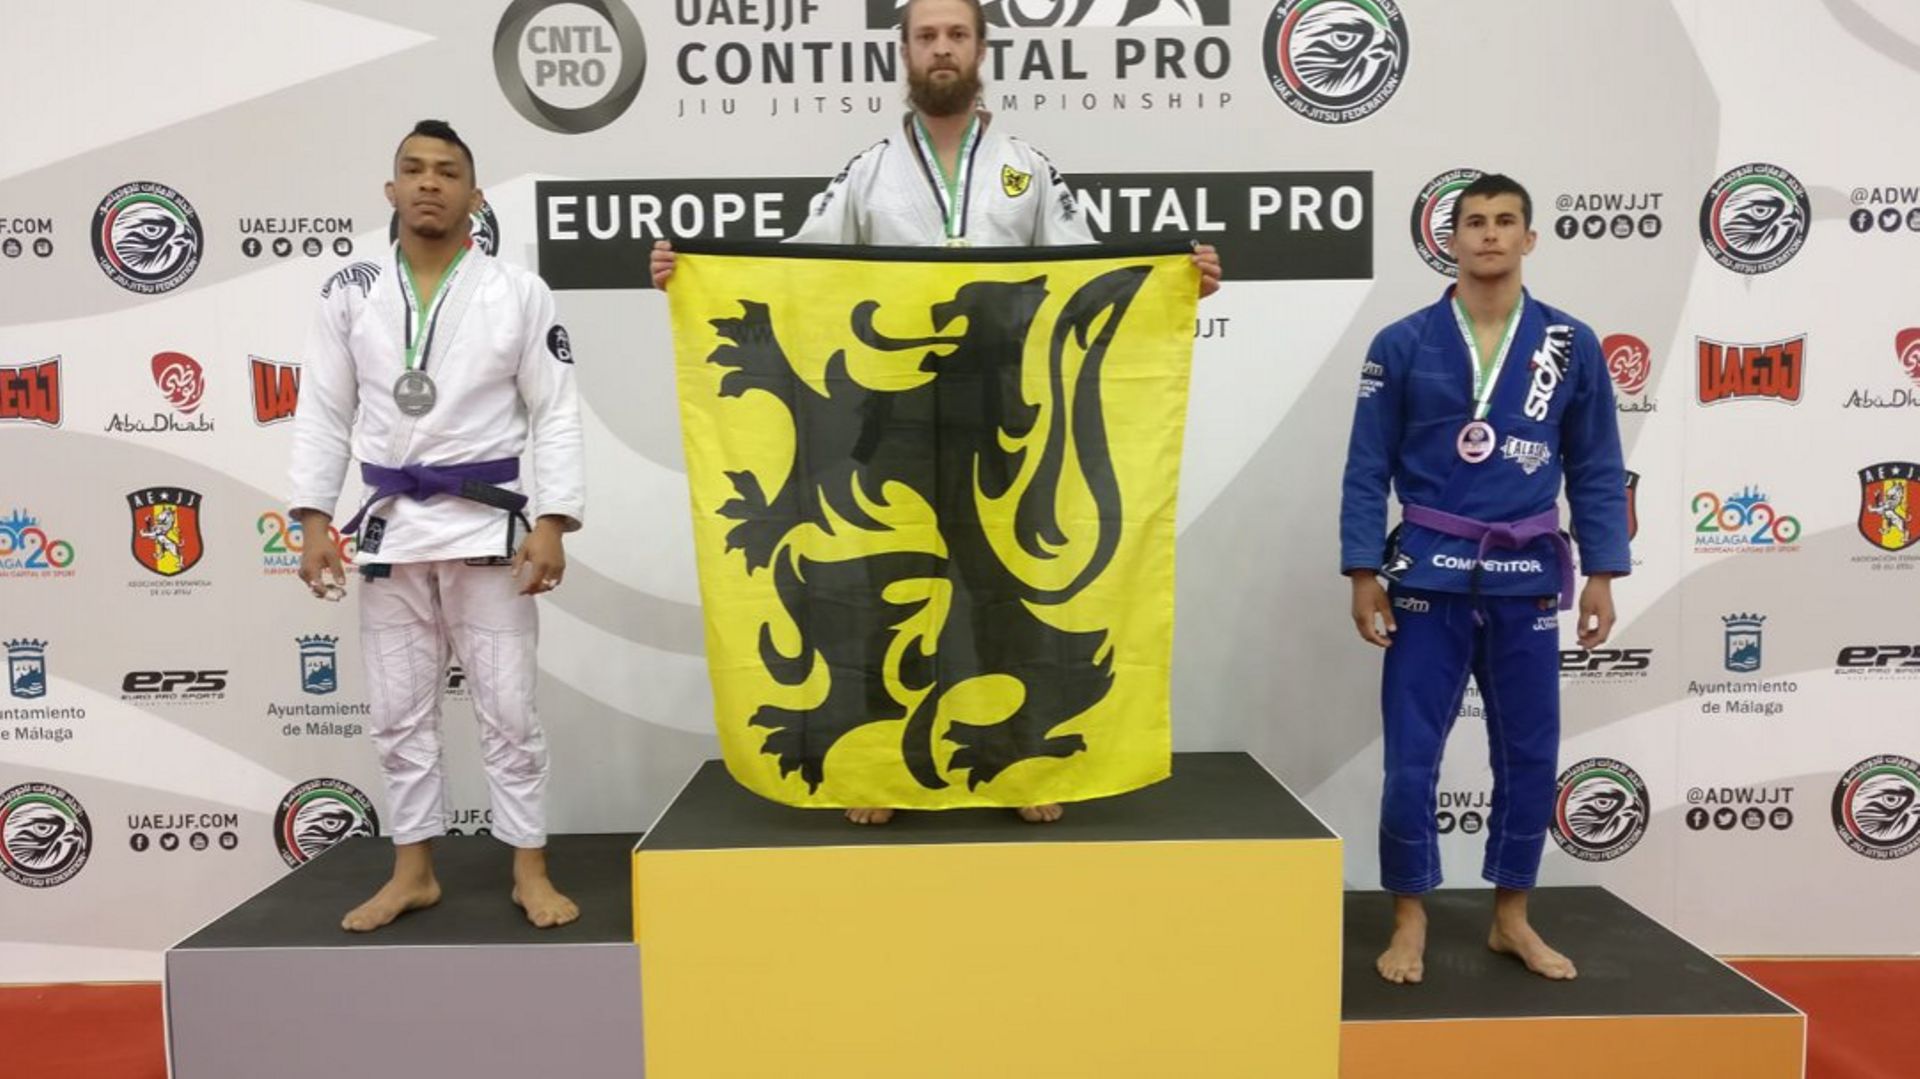 Maarten Bauwens sur le podium des championnats d'Europe de jiu-jitsu